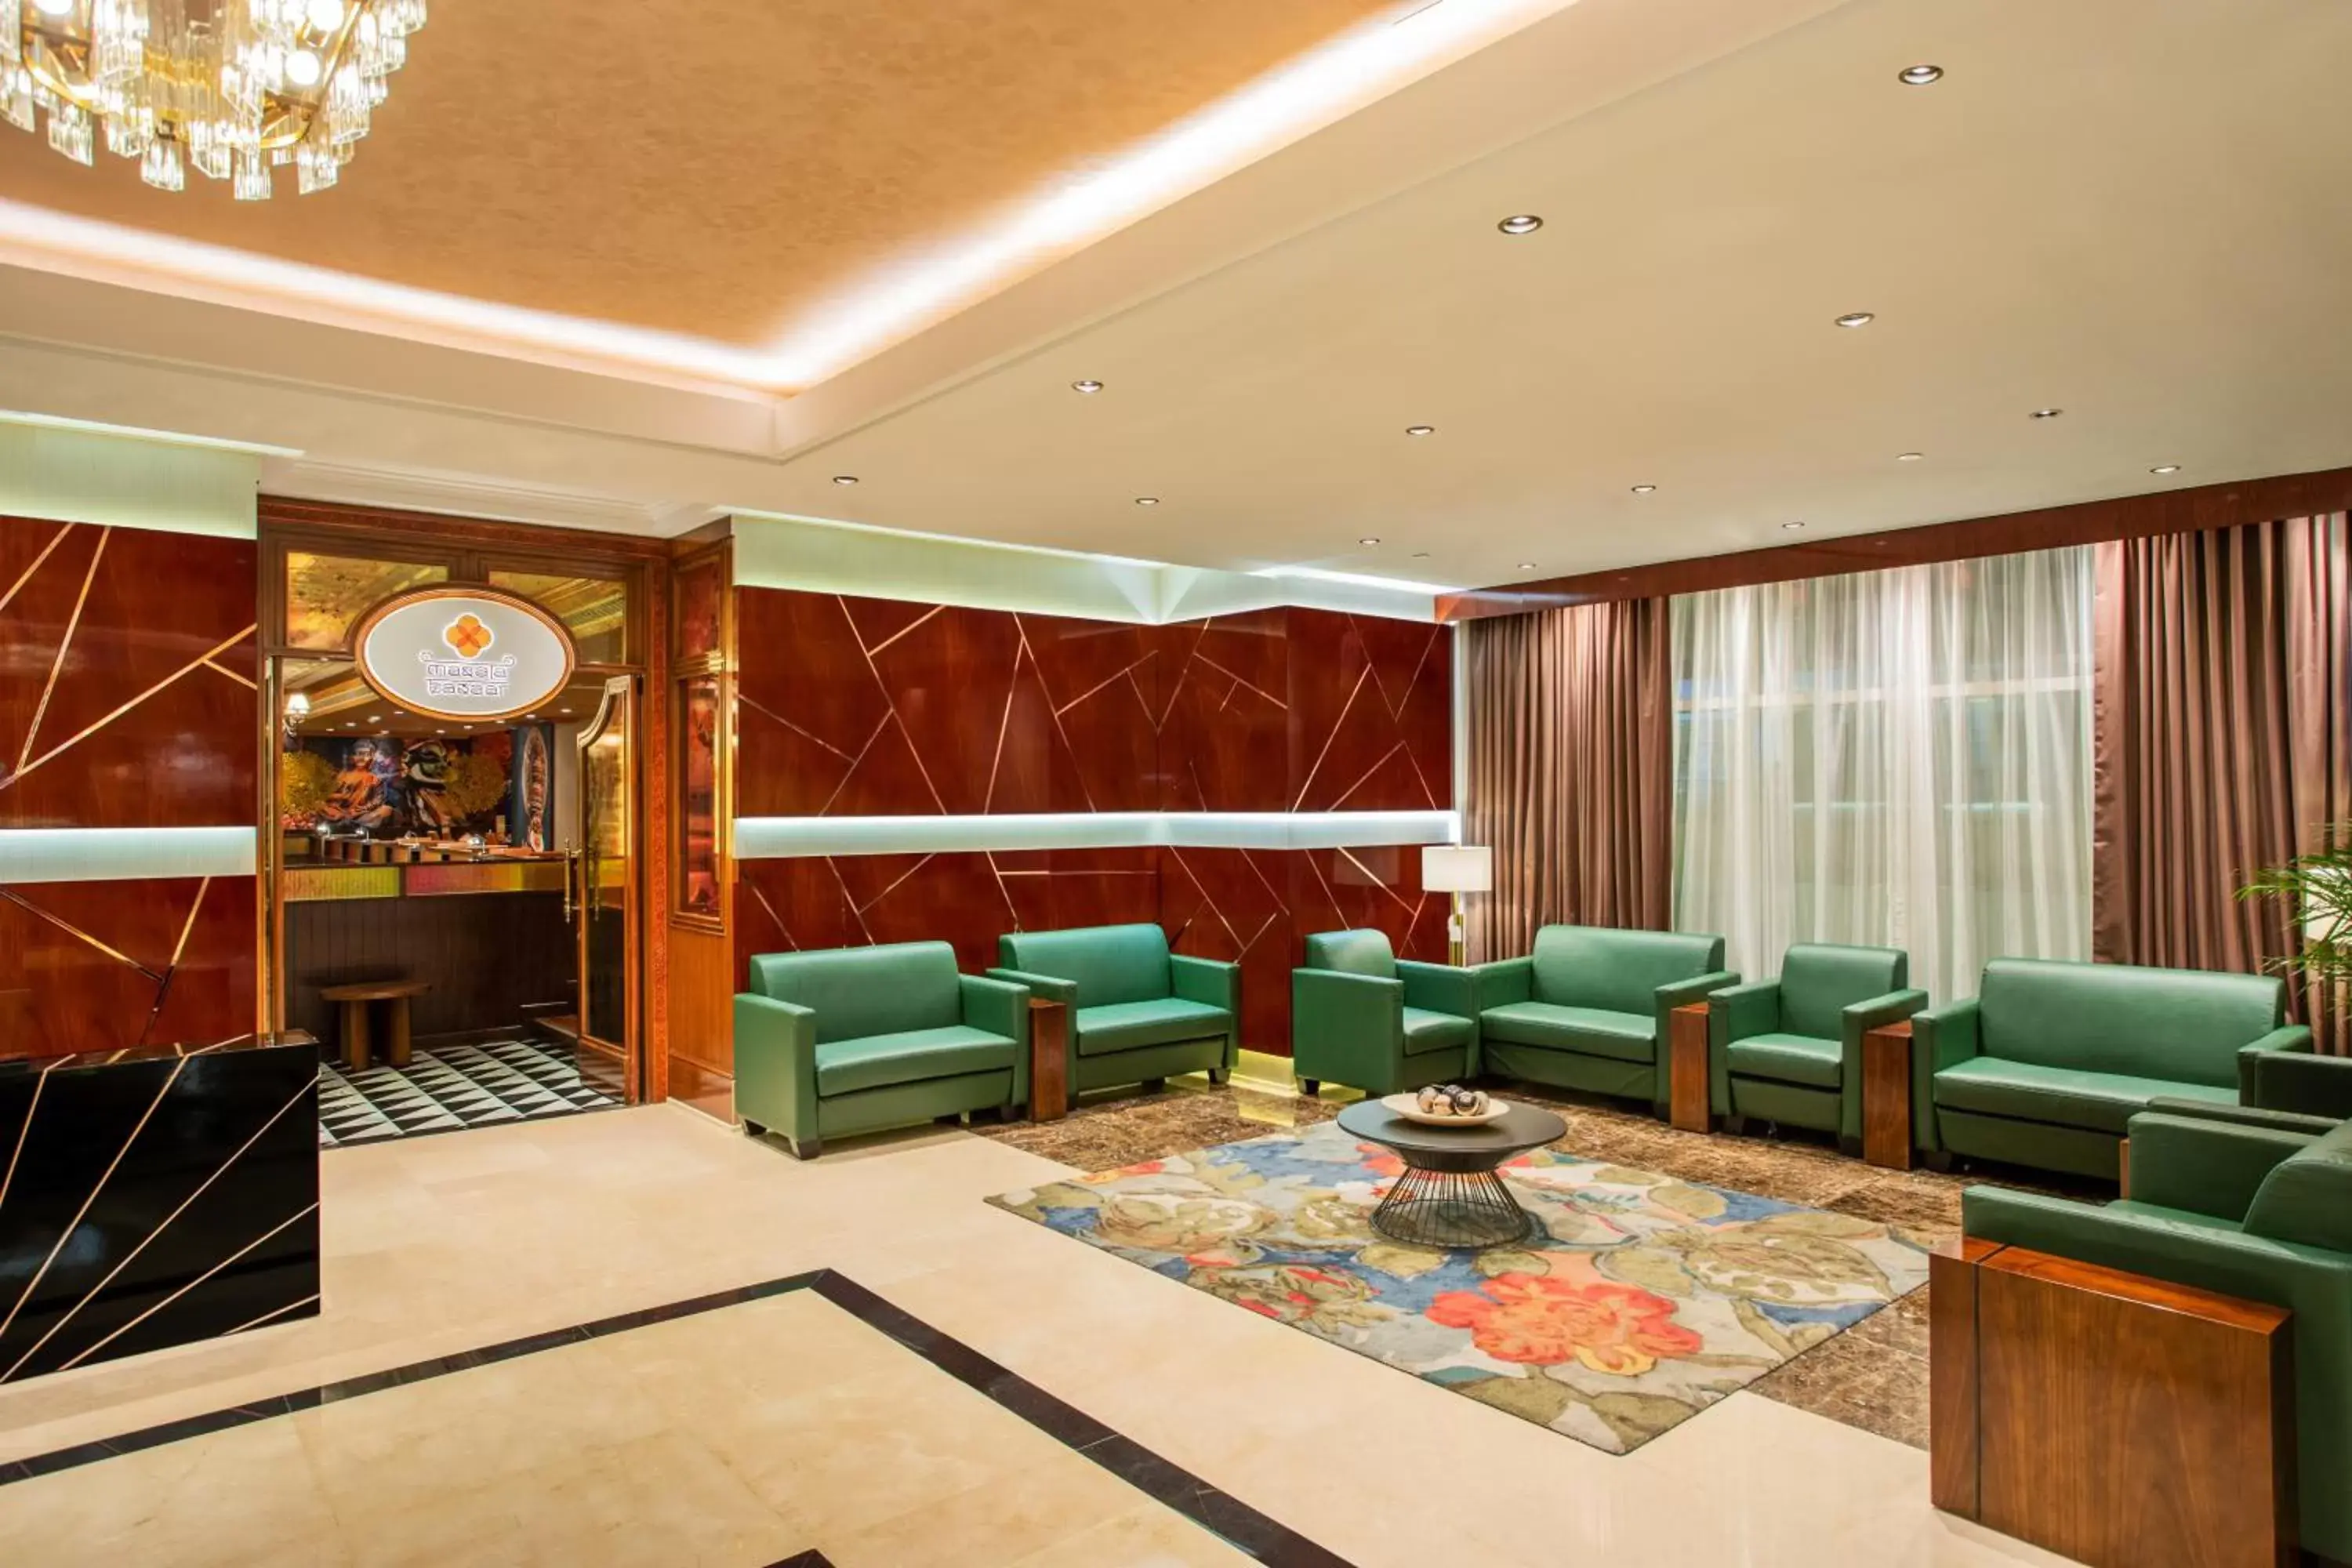 Lobby or reception in Park Regis Kris Kin Hotel